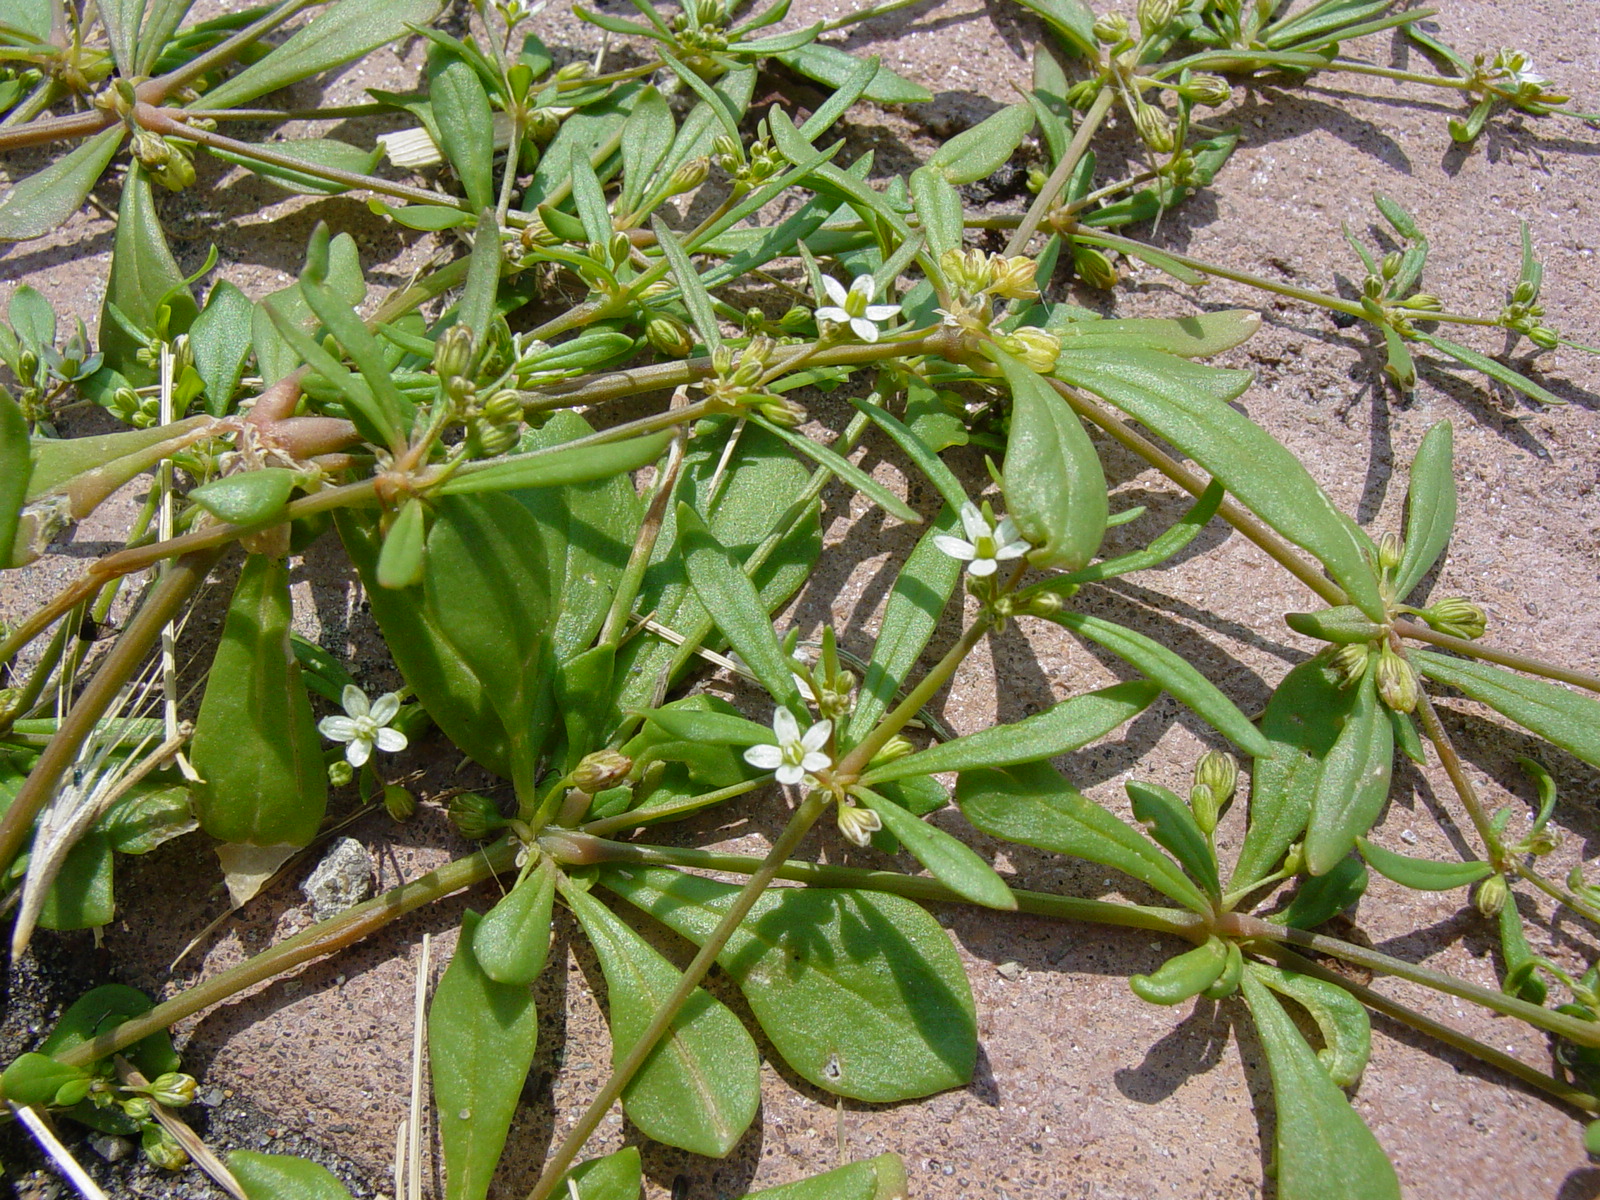 Carpetweed (Mollugo verticillata) with flowers.